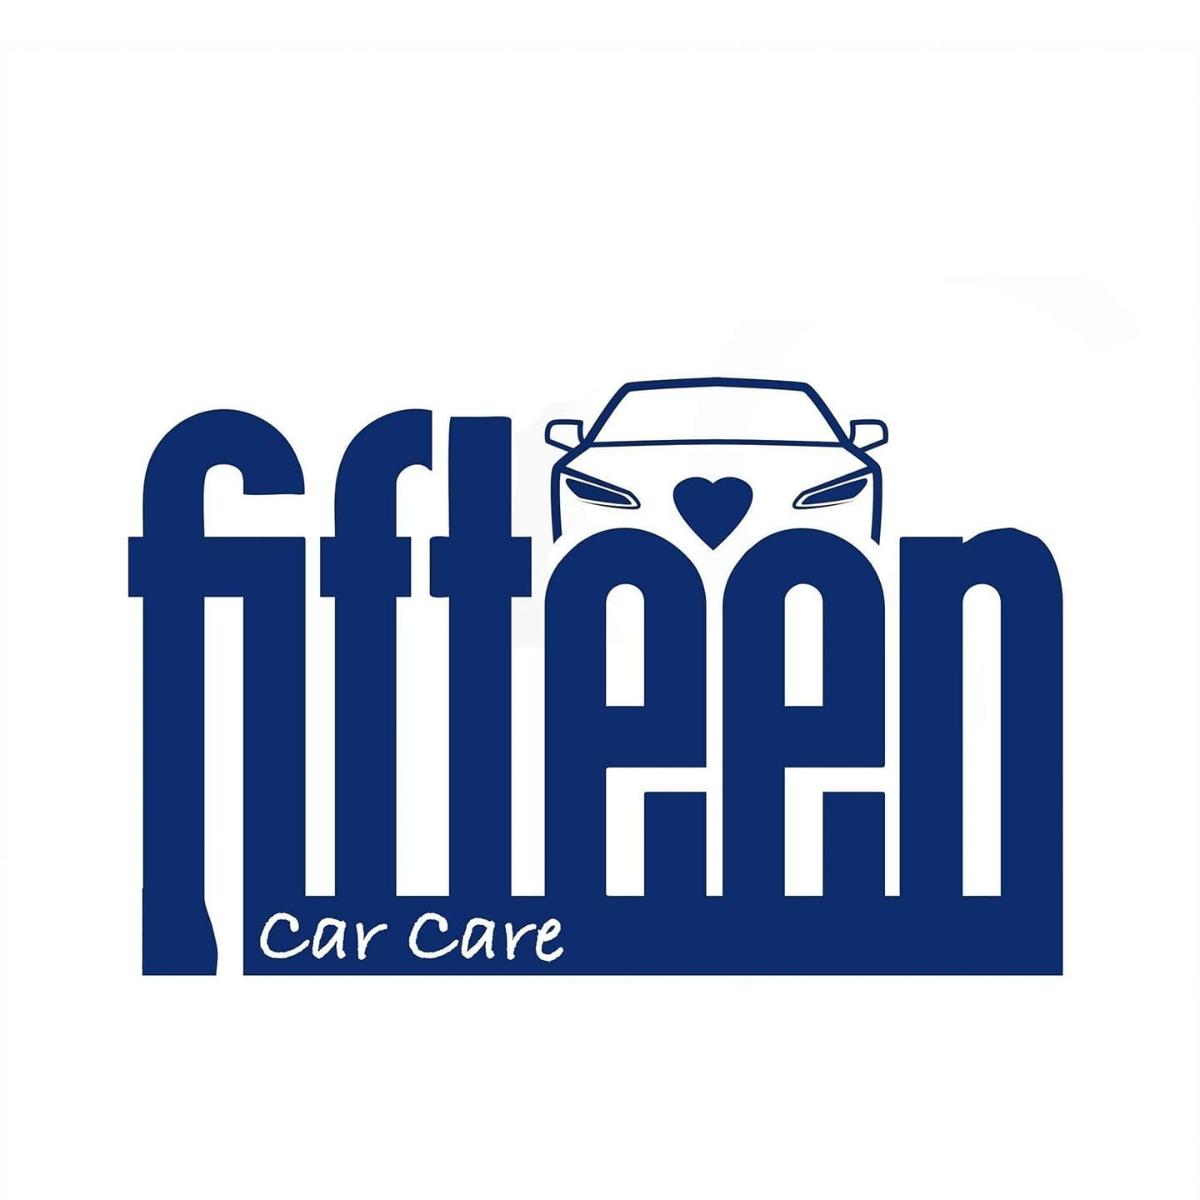 Fifteen Car Care